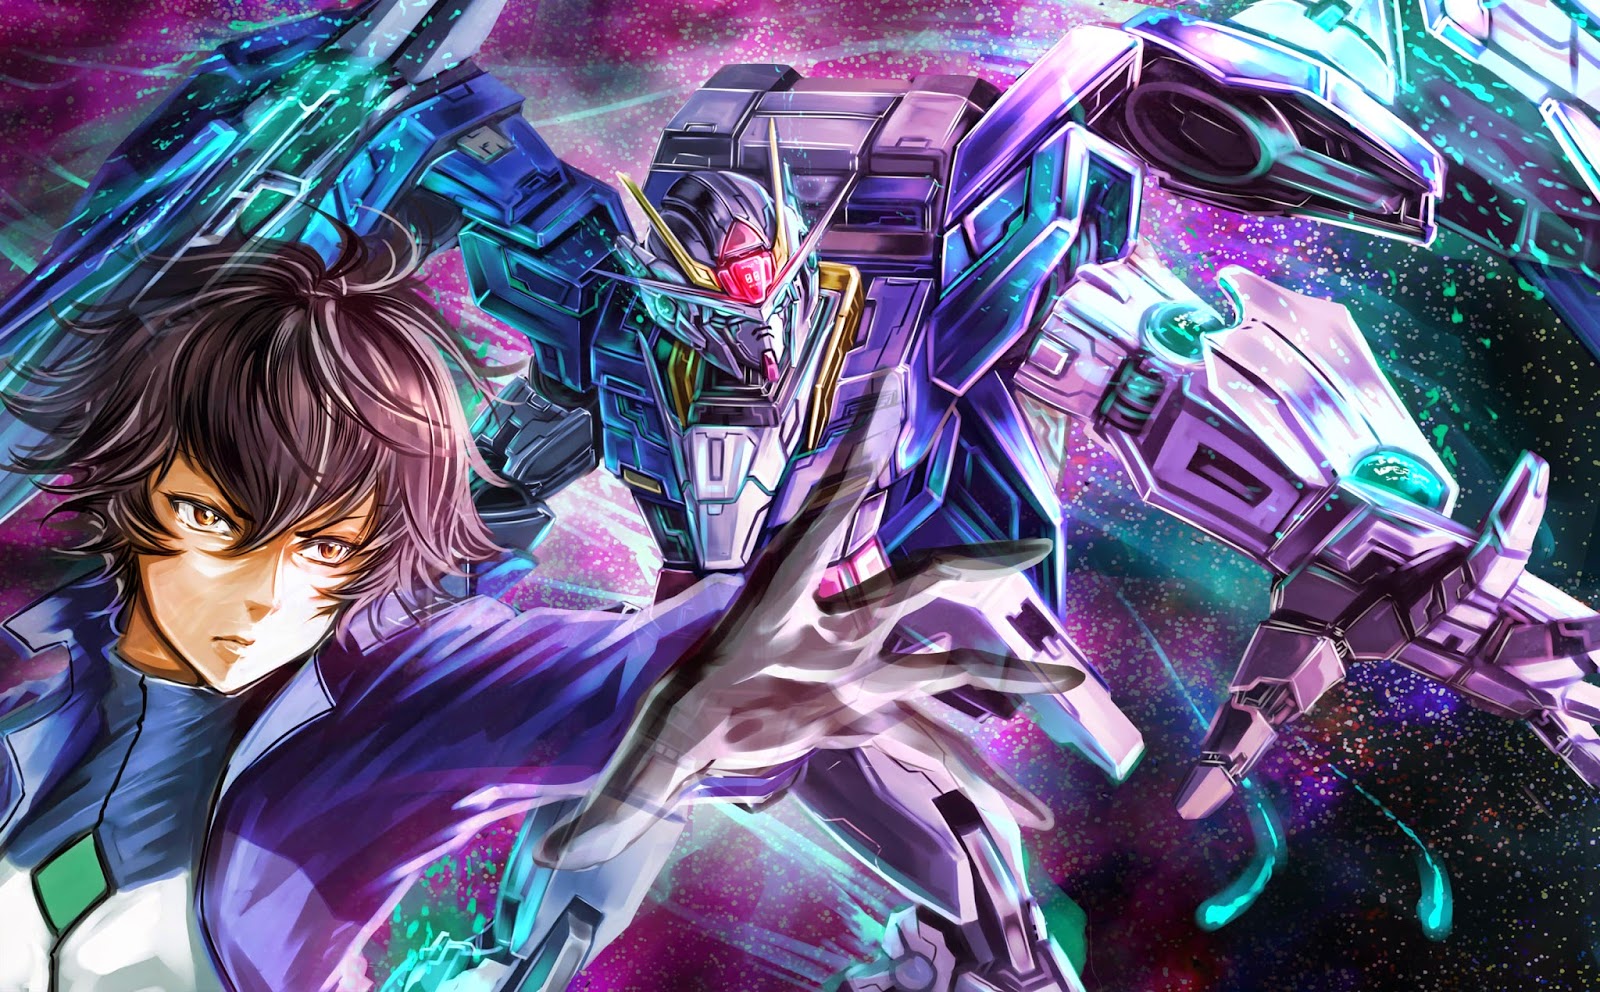 Awesome Gundam Digital Artworks Updated 8/7/16.